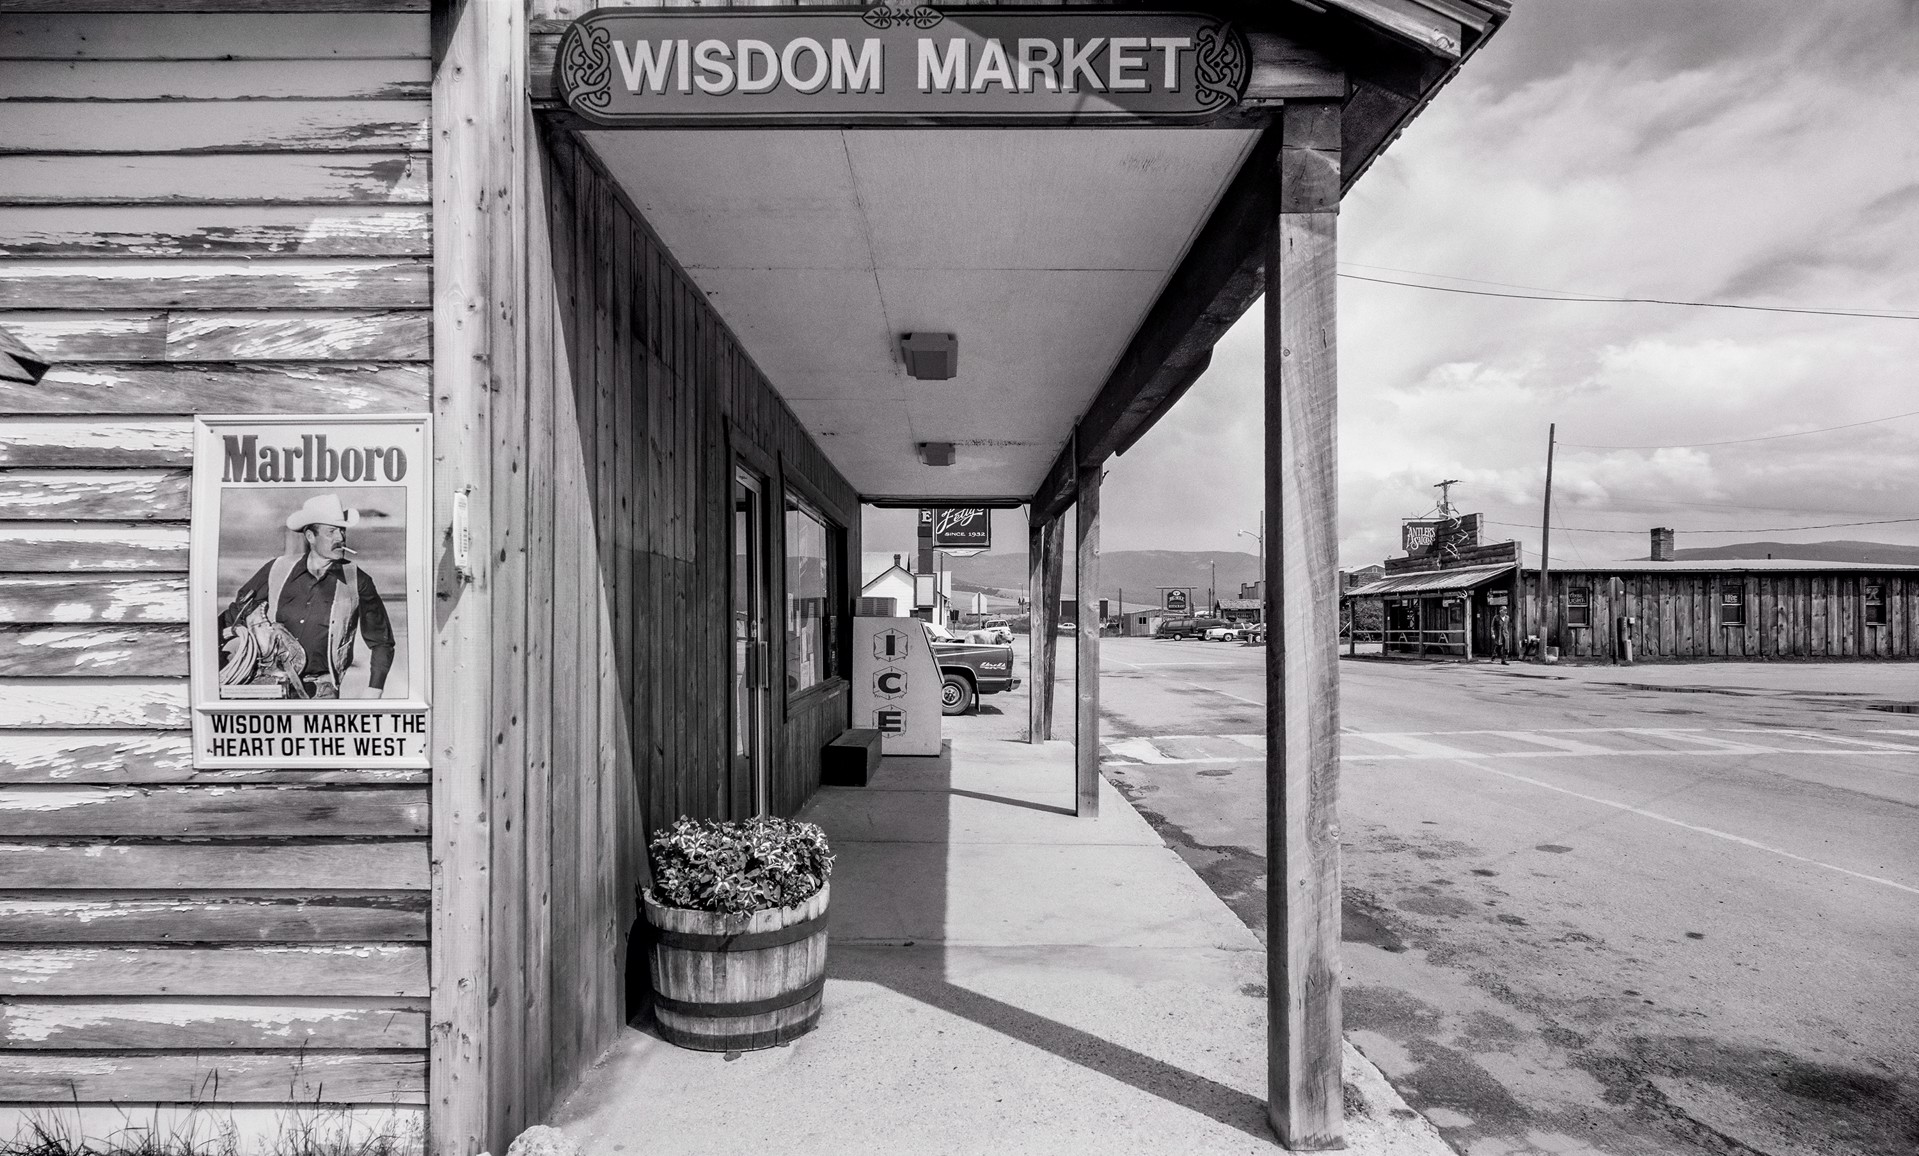 The Real Marlboro Man & His Dog, Wisdom Market, Montana by Lawrence McFarland